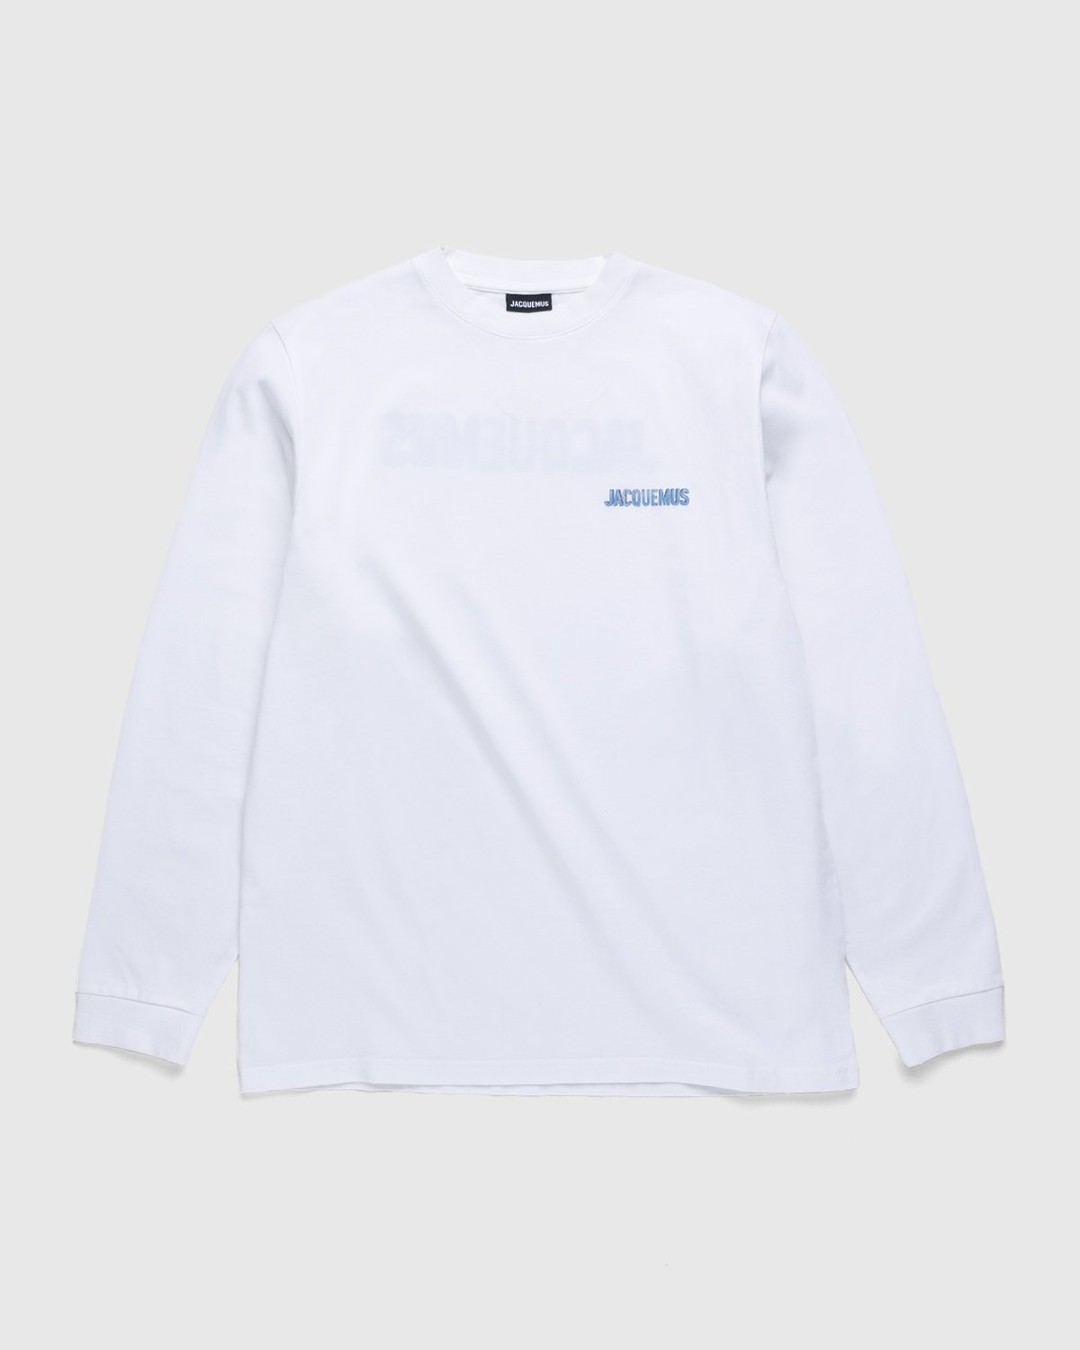 JACQUEMUS – Le T-Shirt Gelo Print Ice Jacquemus White - Tops - White - Image 1